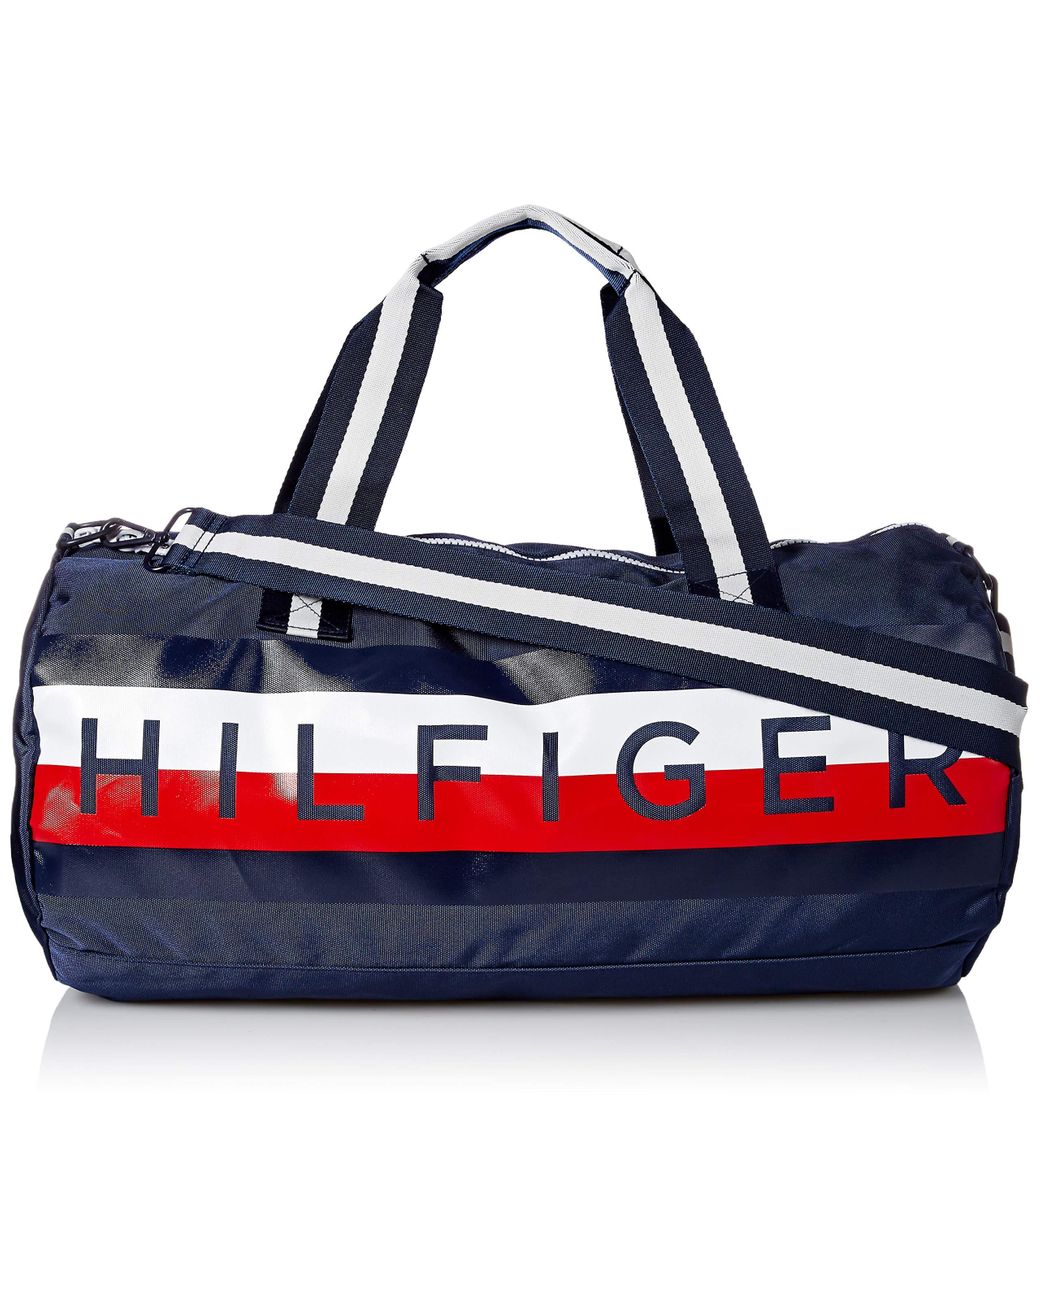 Tommy Hilfiger Patriot Duffle Bag Online Sale, UP TO 58% OFF